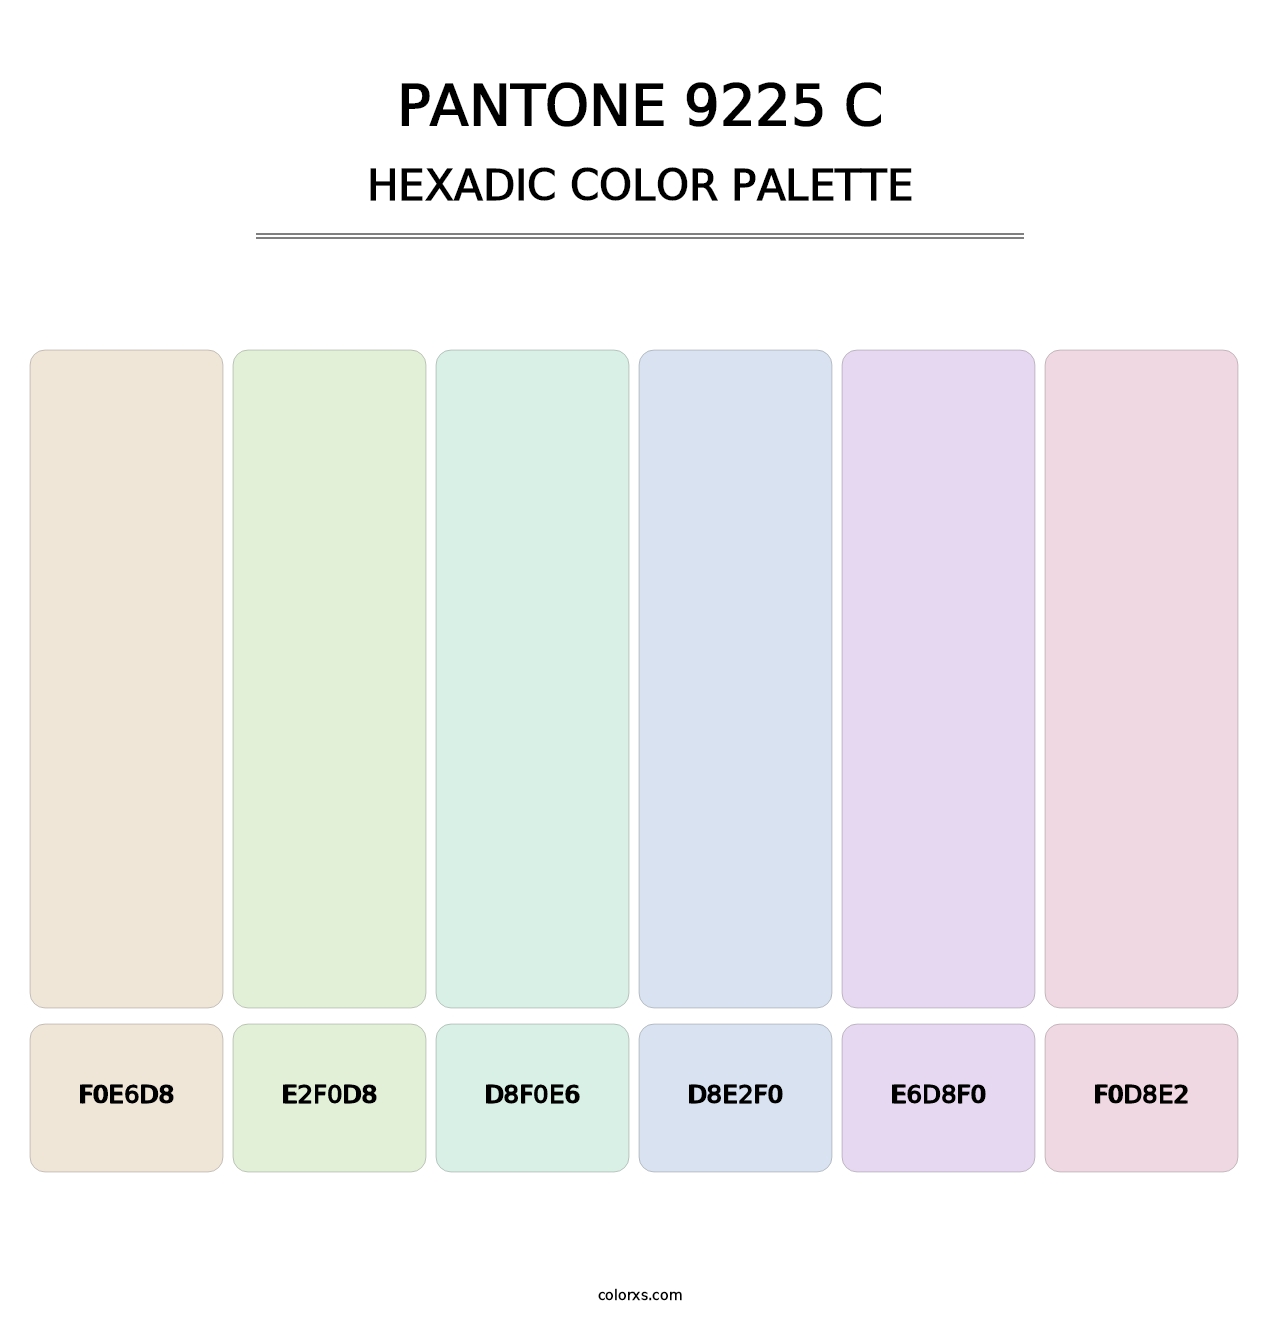 PANTONE 9225 C - Hexadic Color Palette